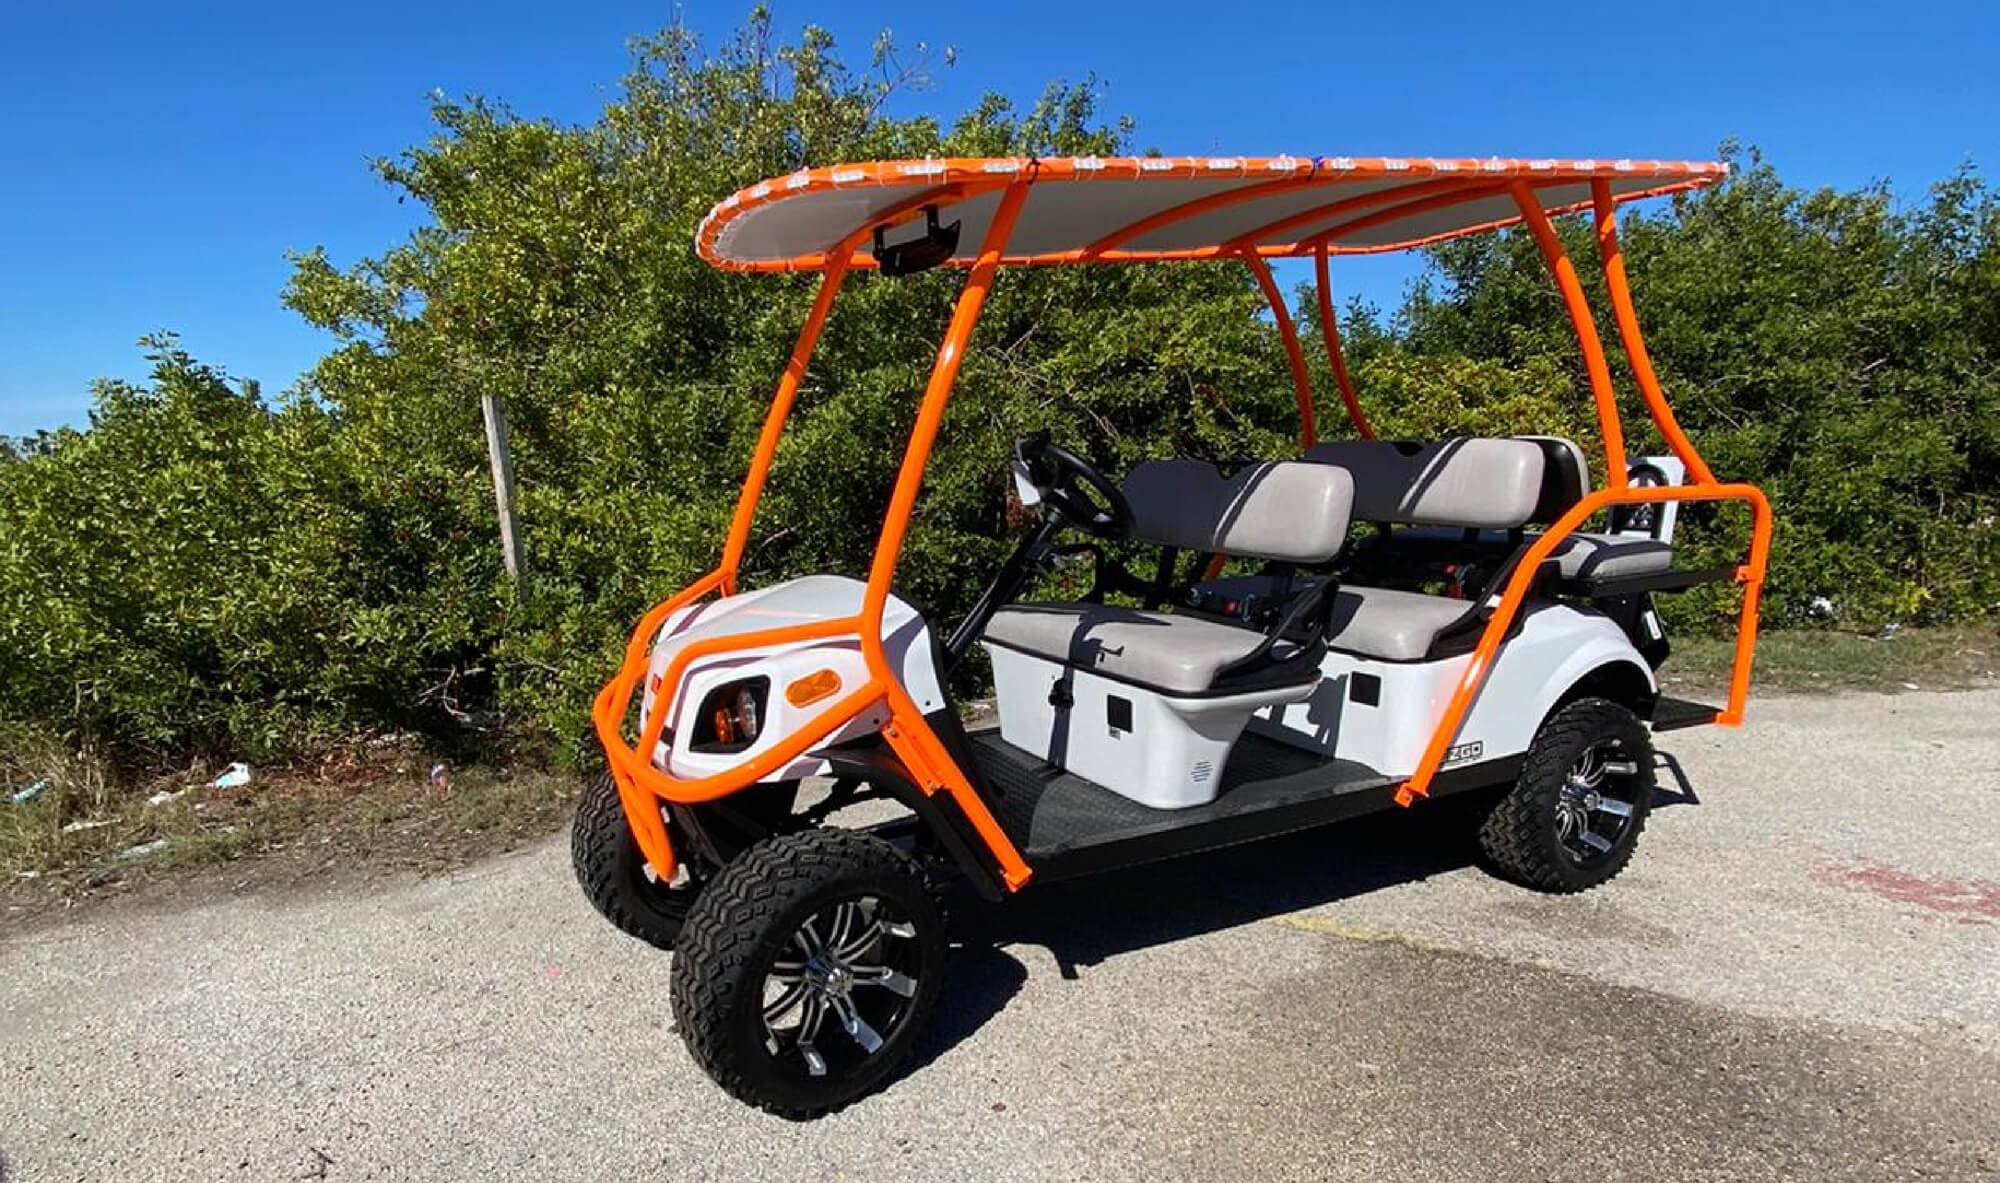 Crystal beach golf cart rental